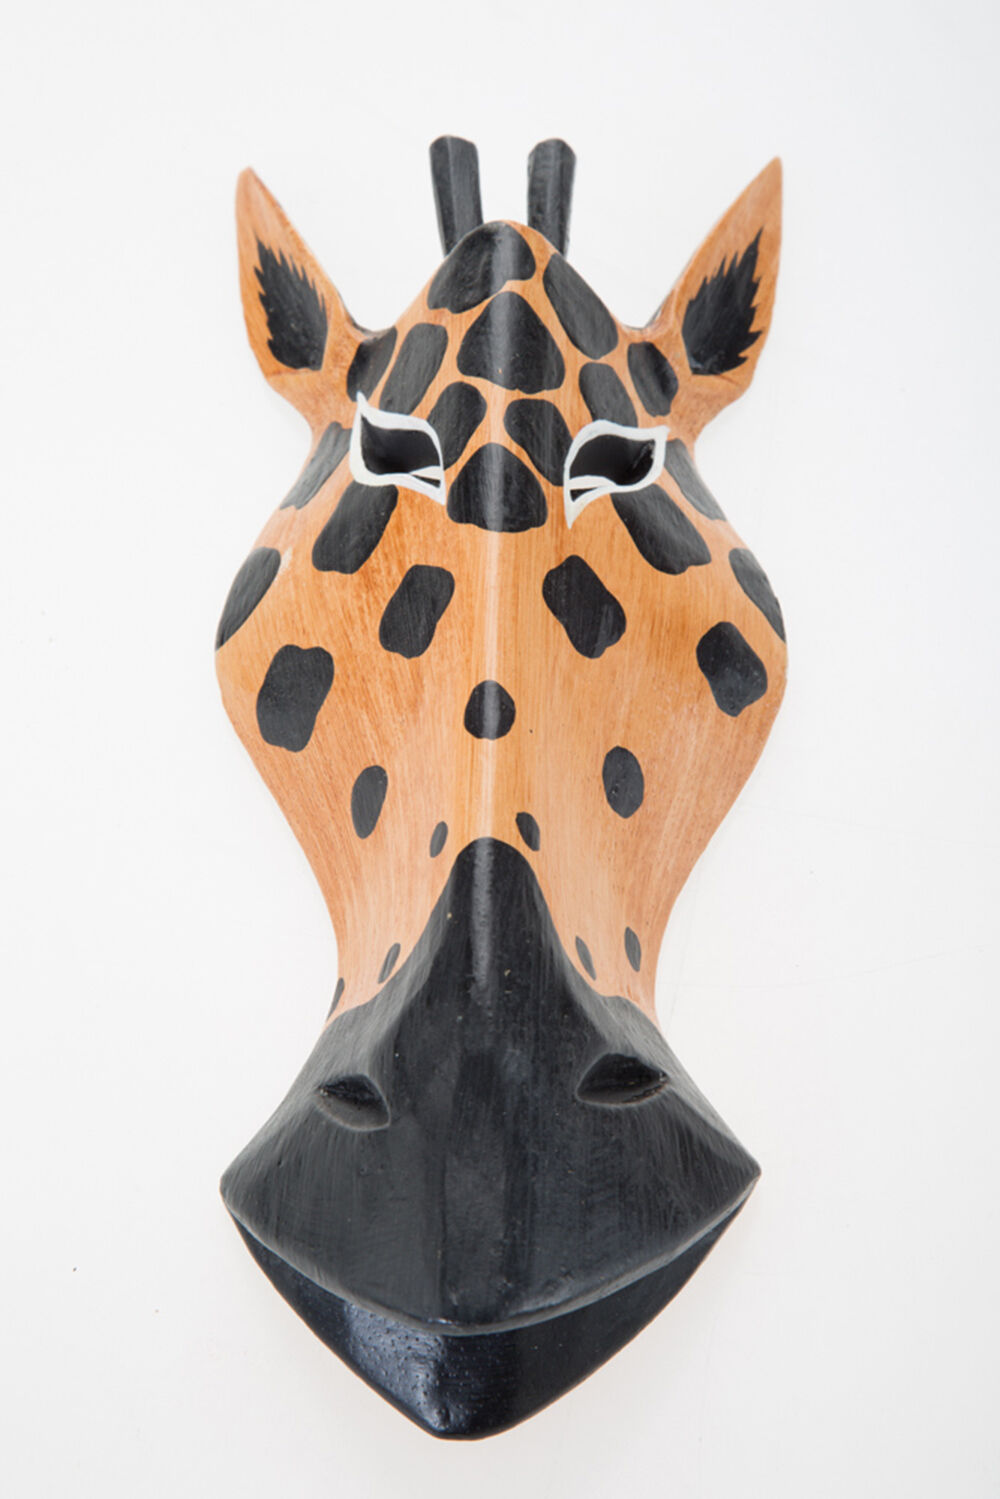 Sculptured Giraffe Head Wood Carve Hand Craft Wild Animal Wall Decor Art Hanging